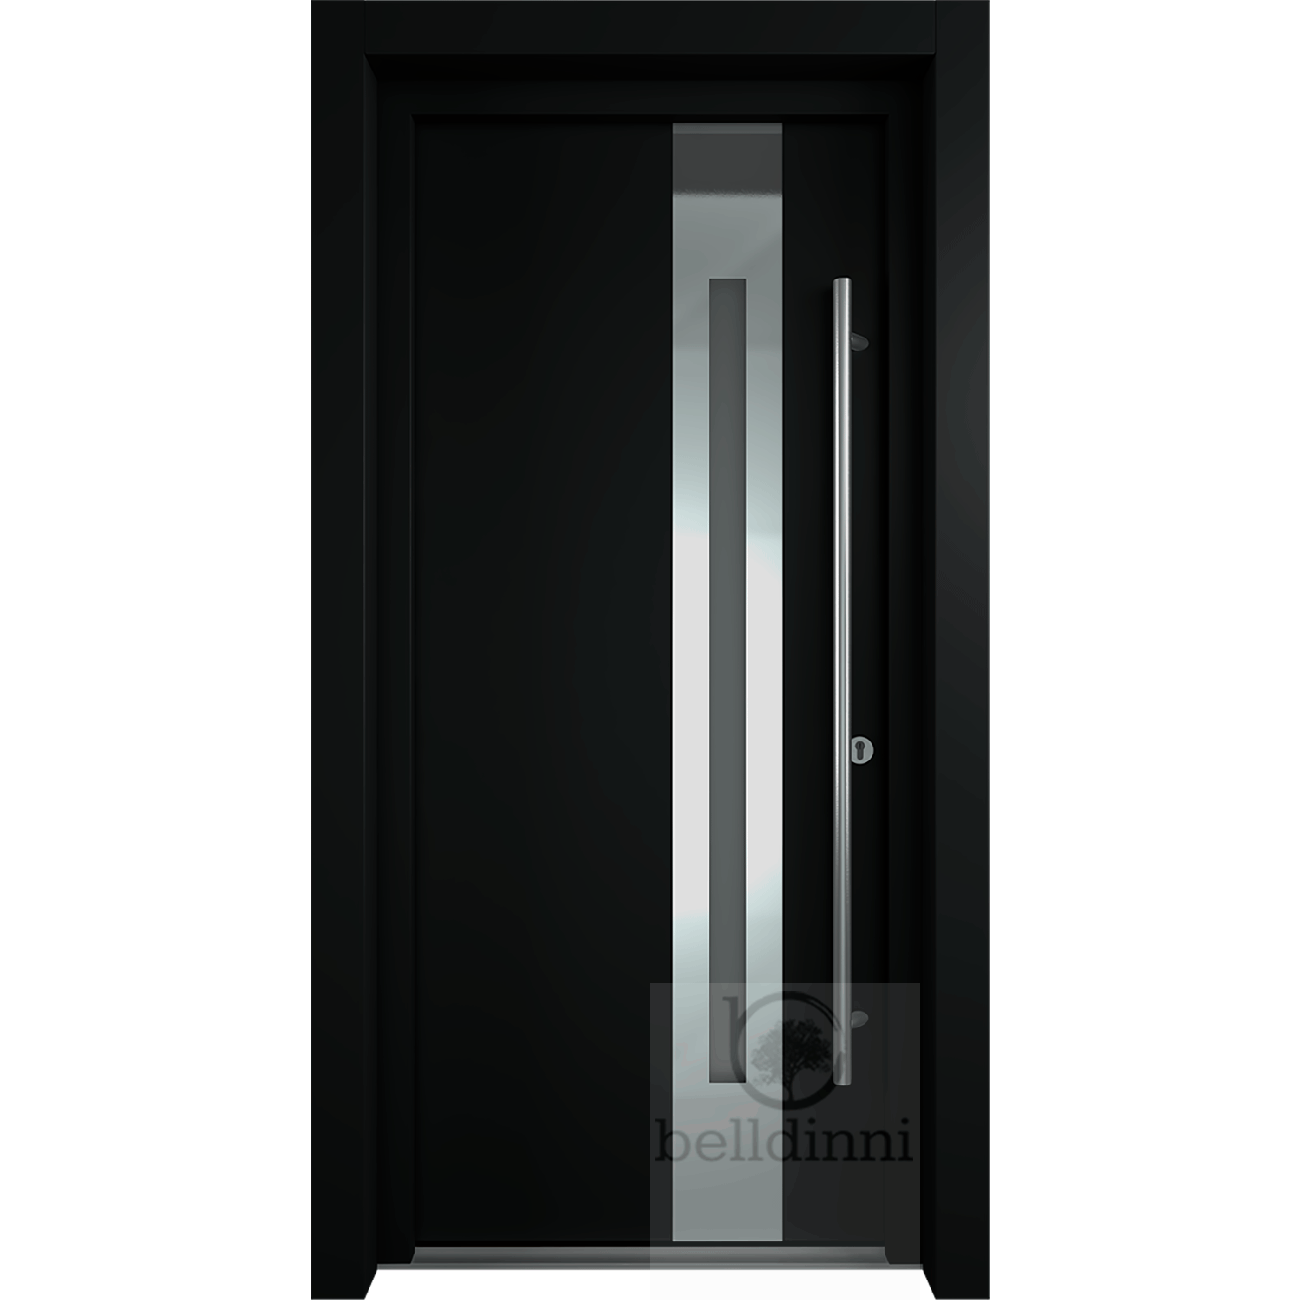 MODERN FRONT STEEL DOOR ZEPHYR BLACK/WHITE 37 2/5" X 81 1/2" LHI + HARDWARE